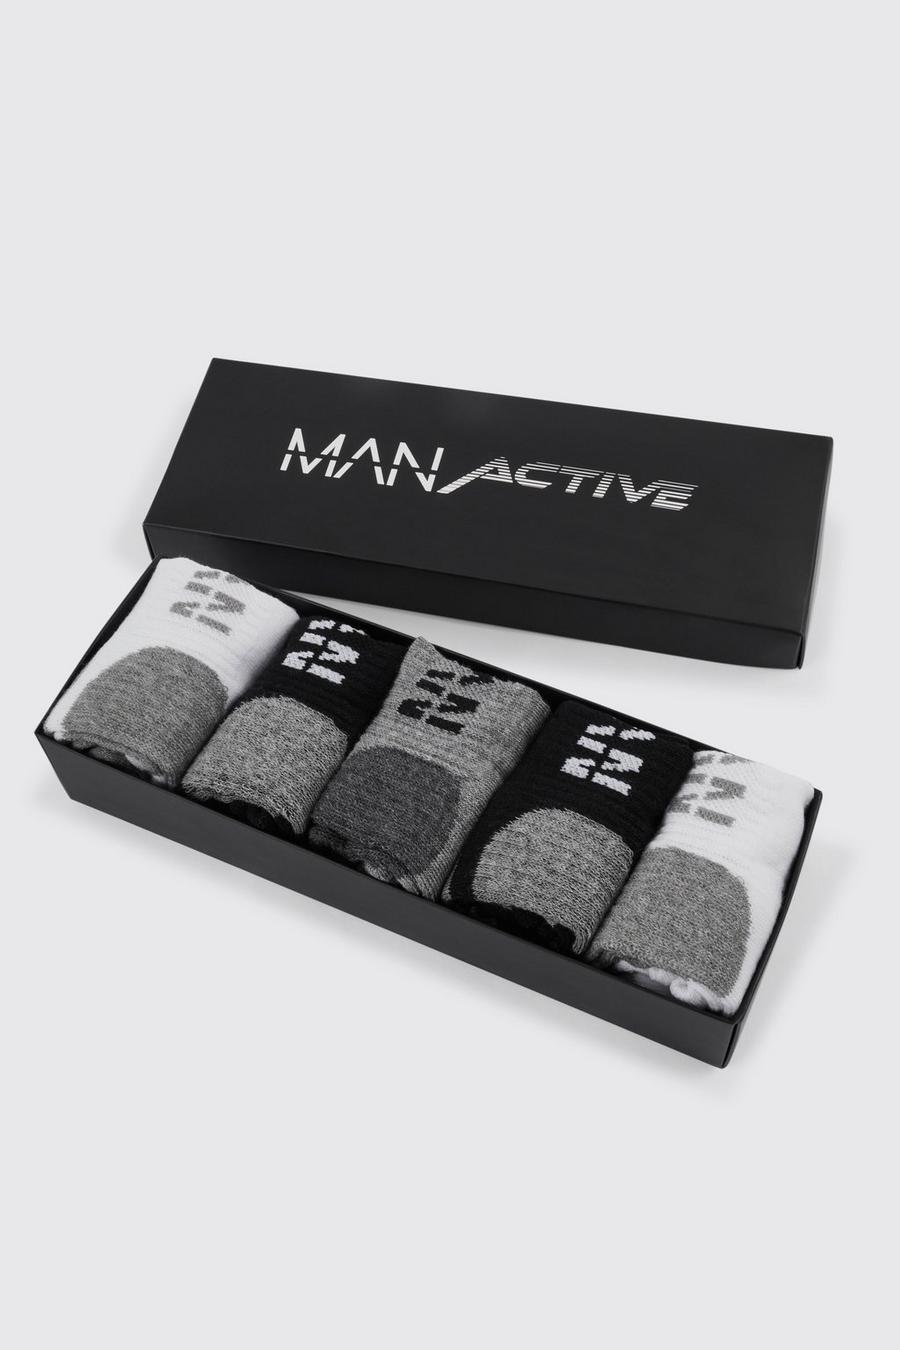 Pack de 5 calcetines MAN Active deportivos en caja de regalo, Multi image number 1